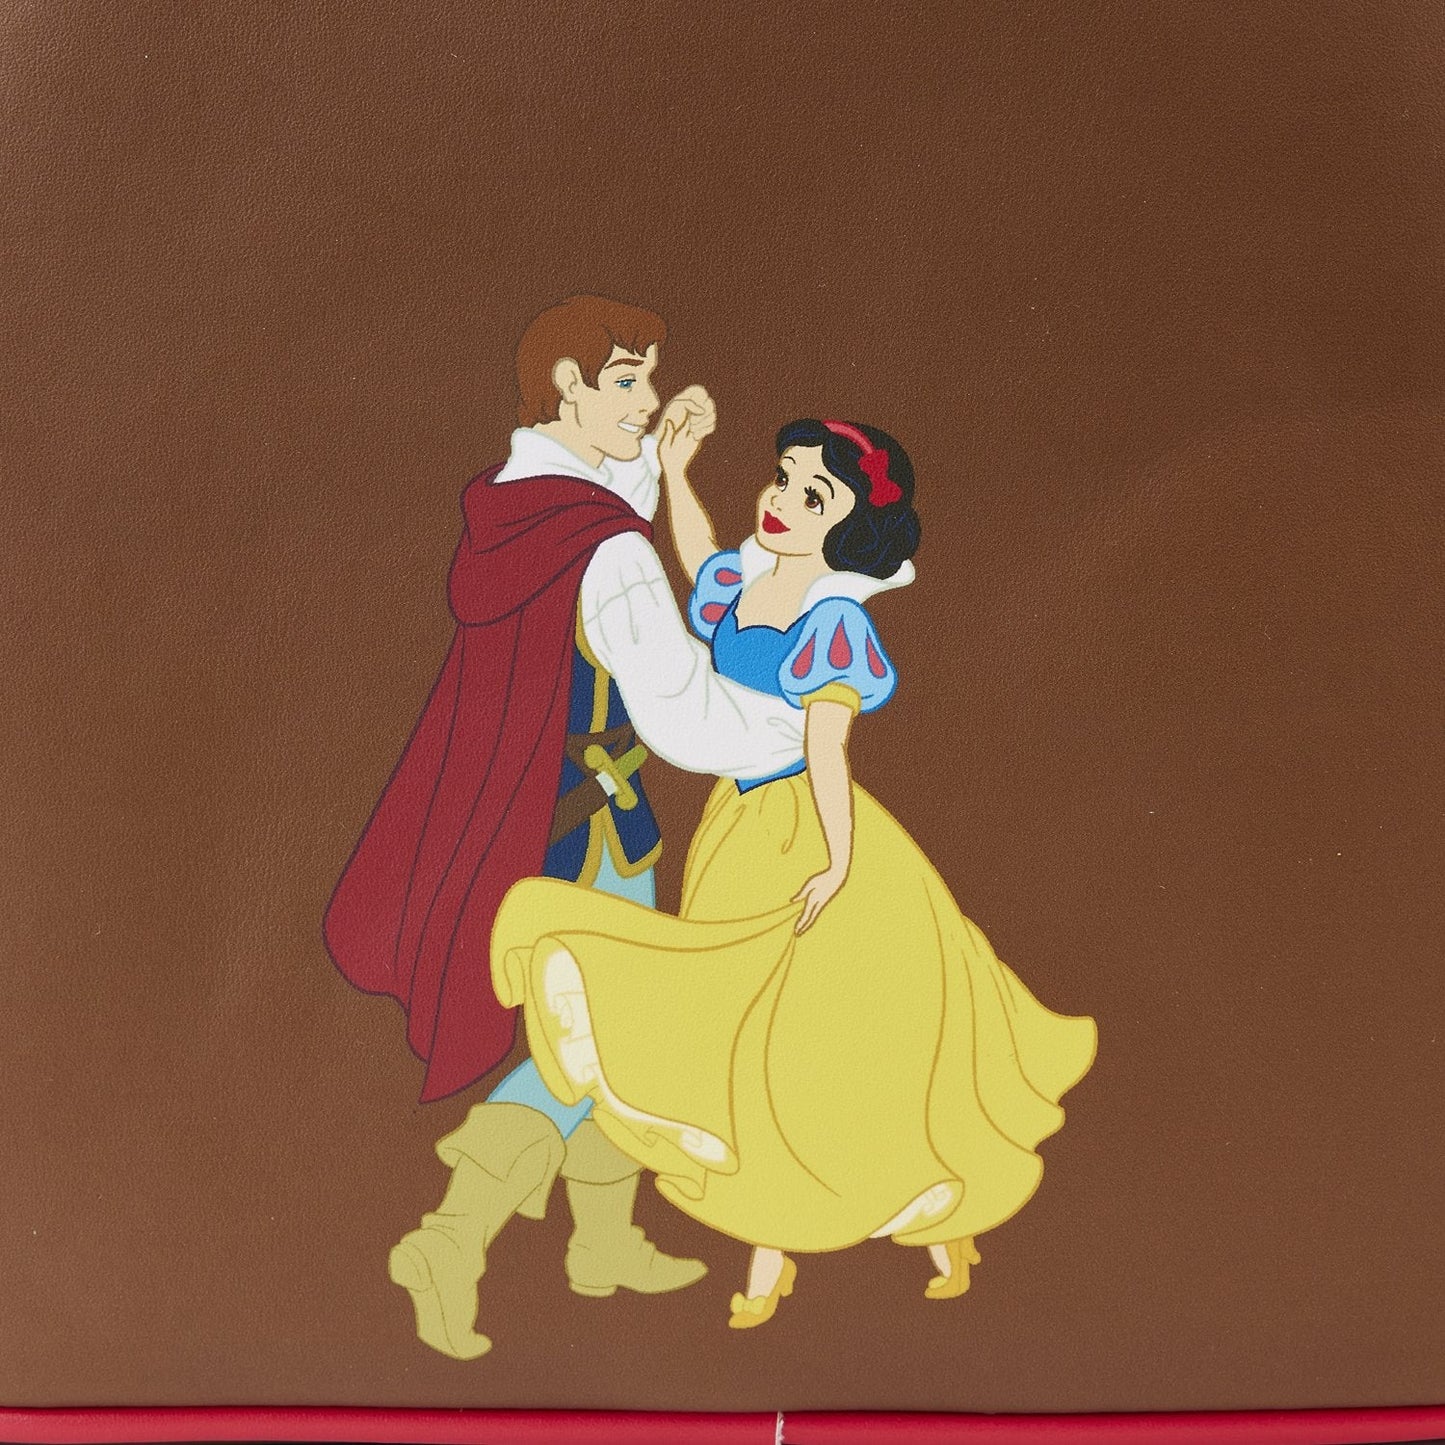 Snow White Lenticular Princess Series mini backpack